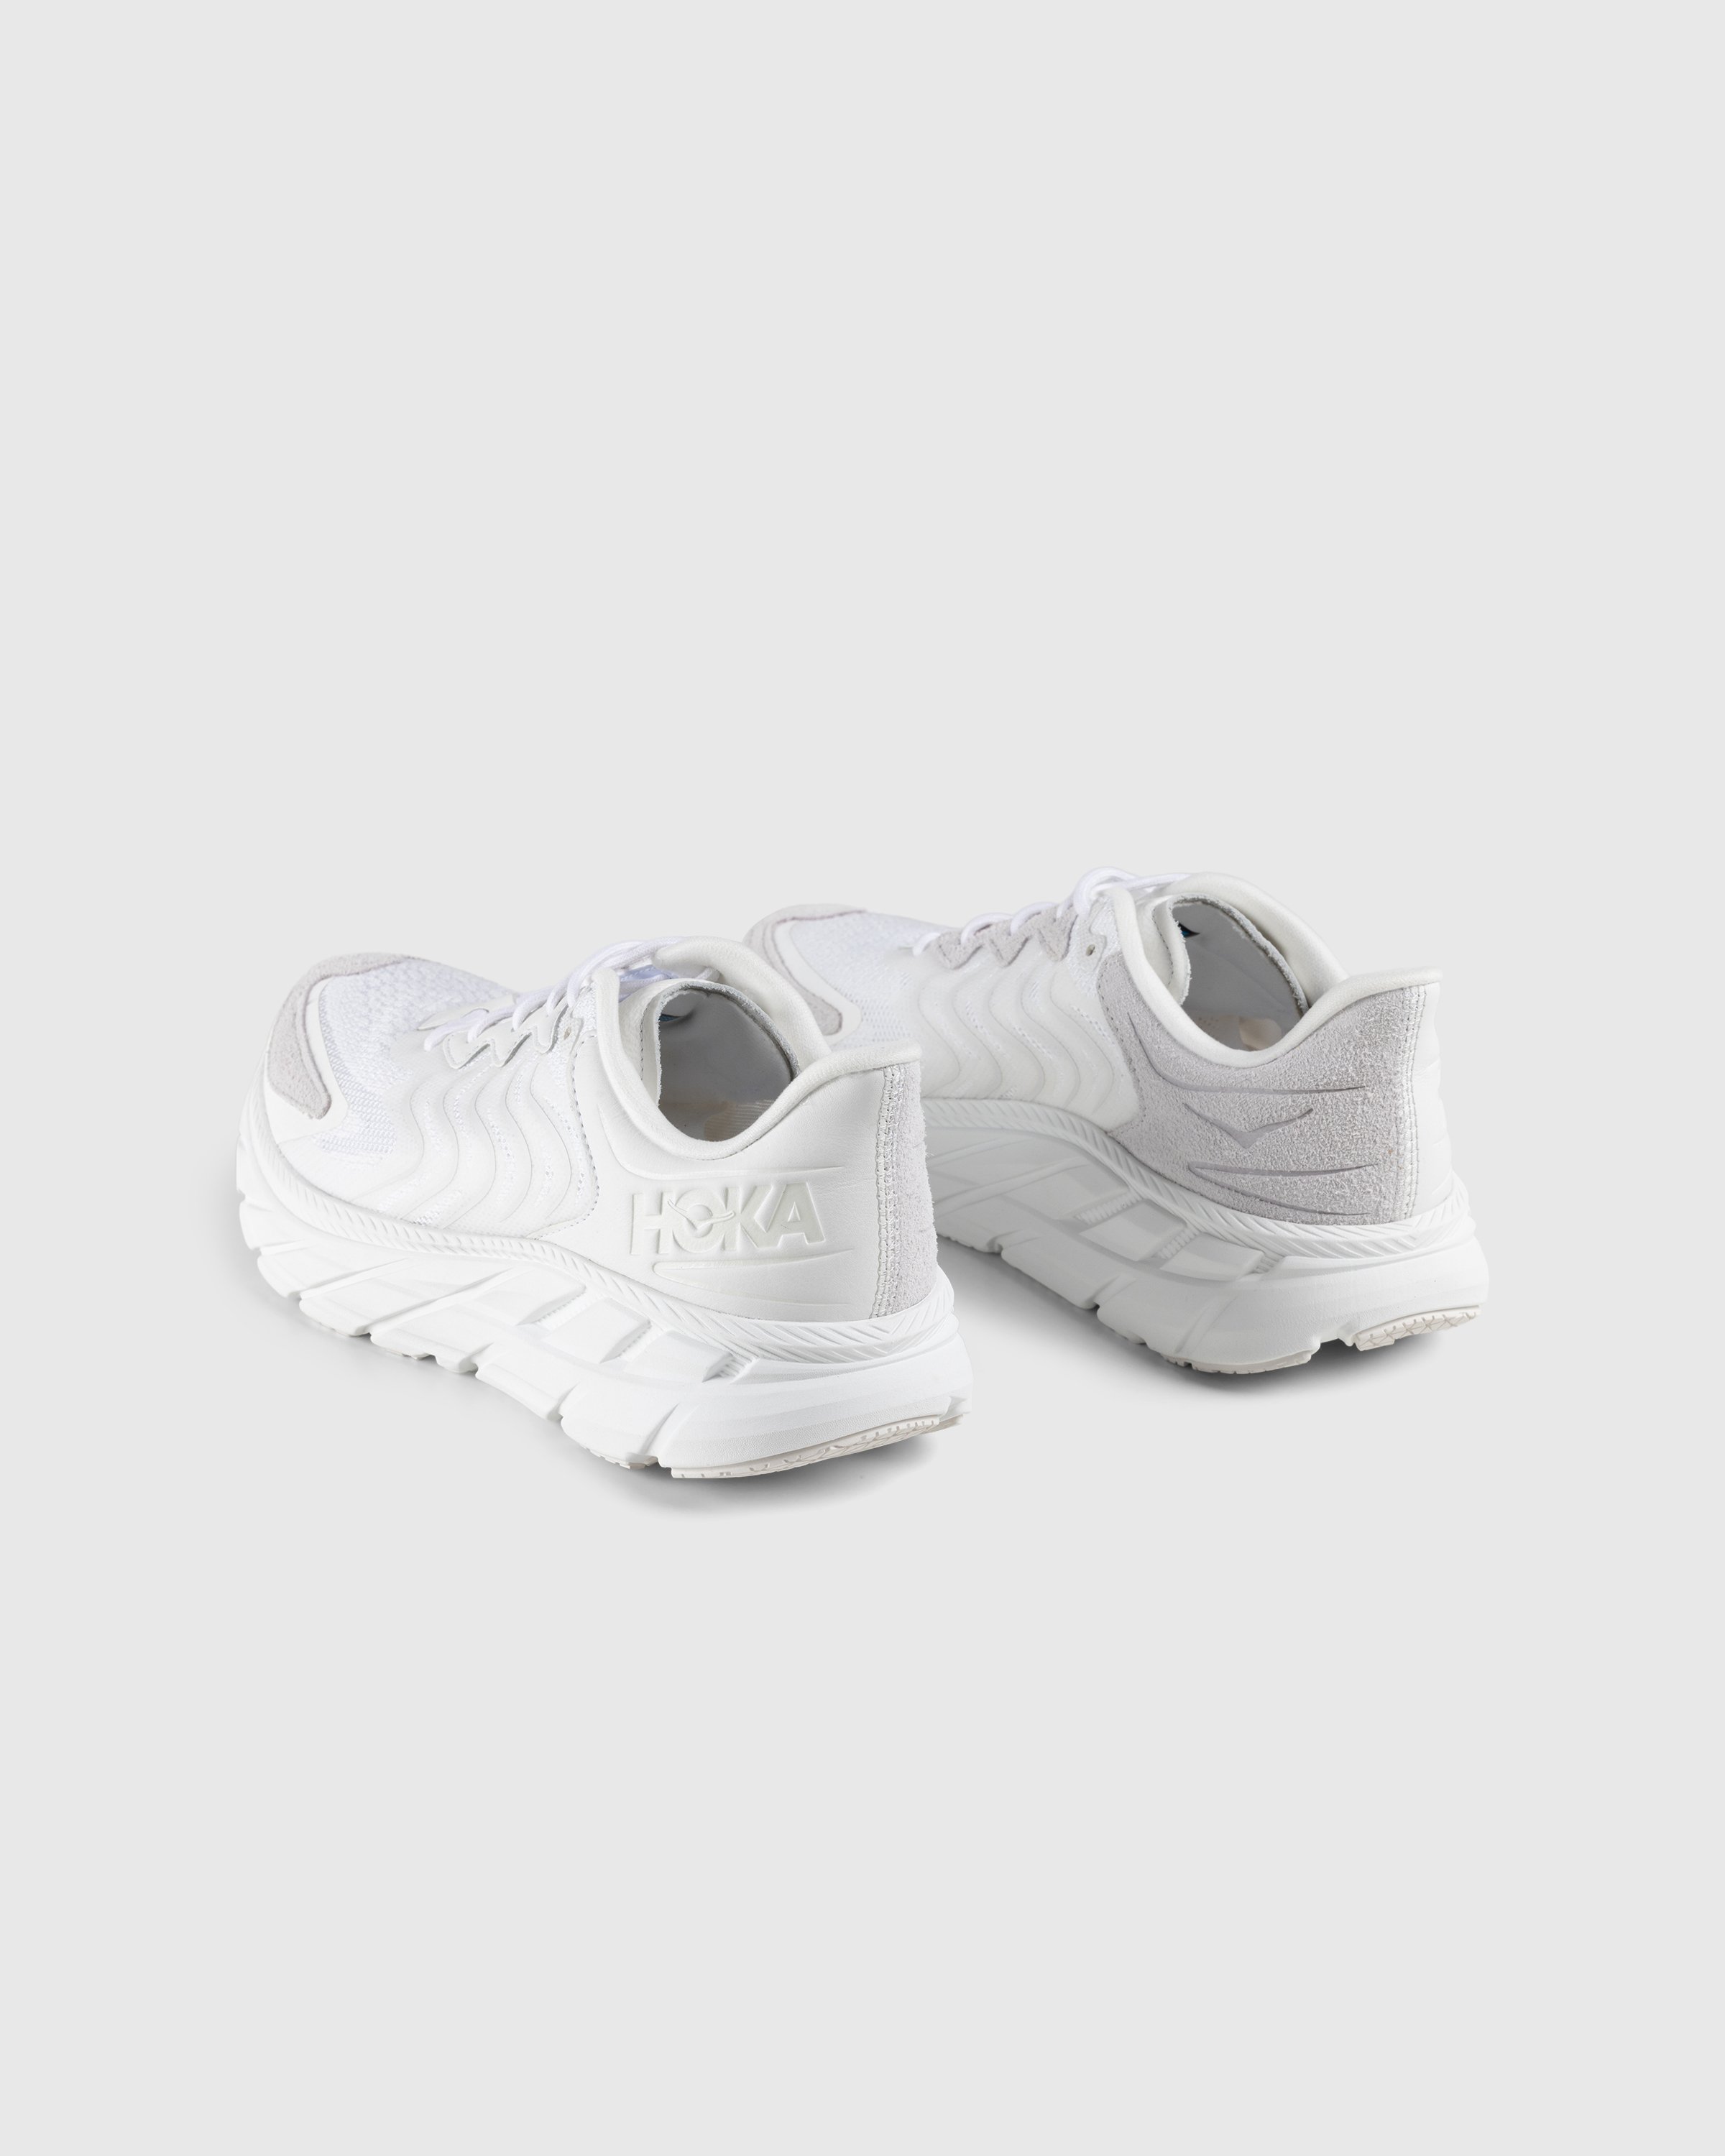 HOKA - Clifton LS White/Nimbus Cloud - Footwear - White - Image 4